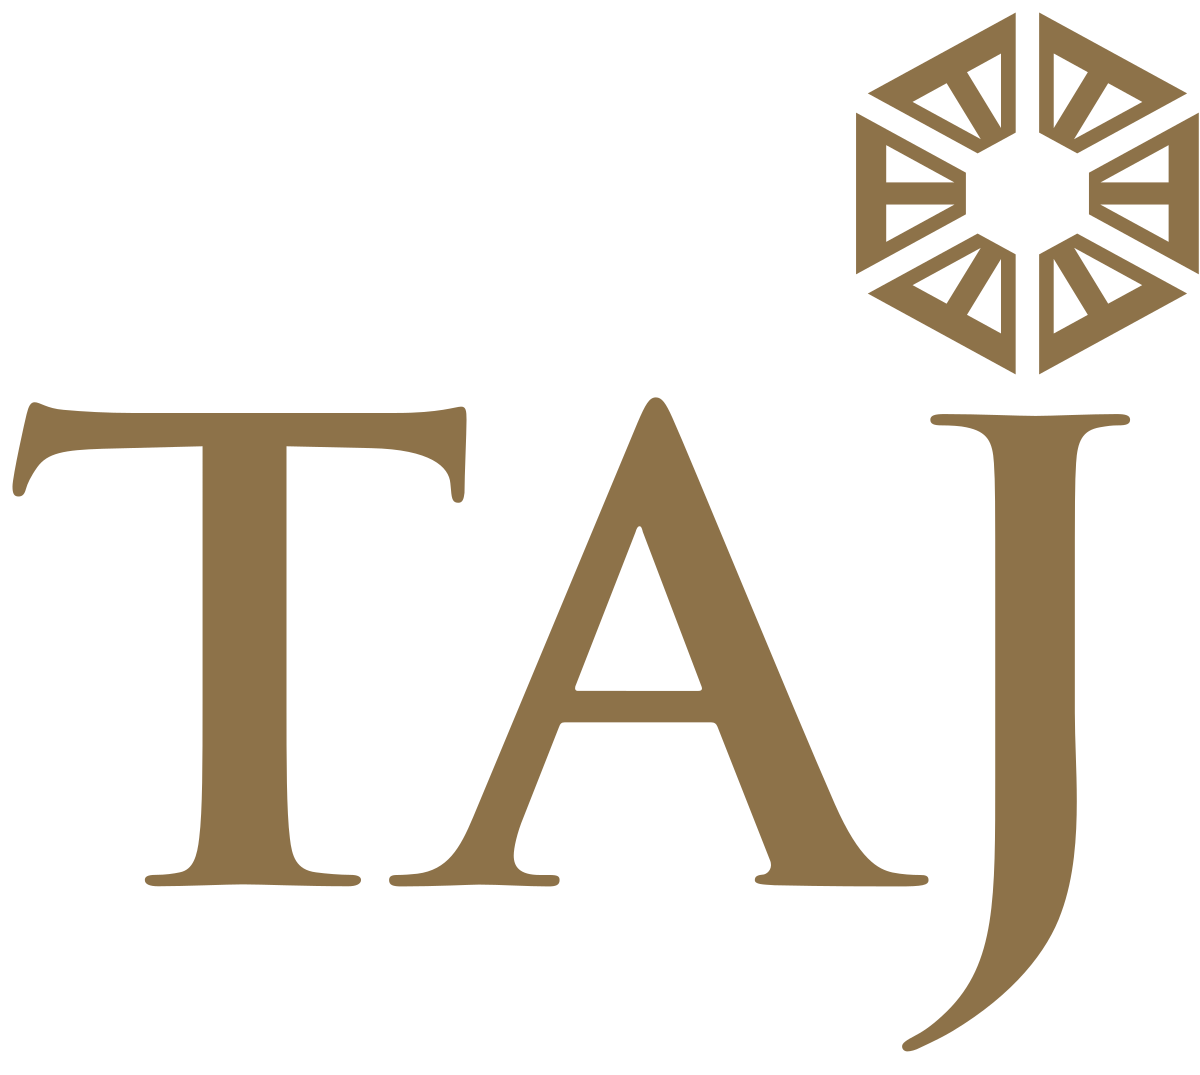 The Taj Group Logo - Taj Hotels